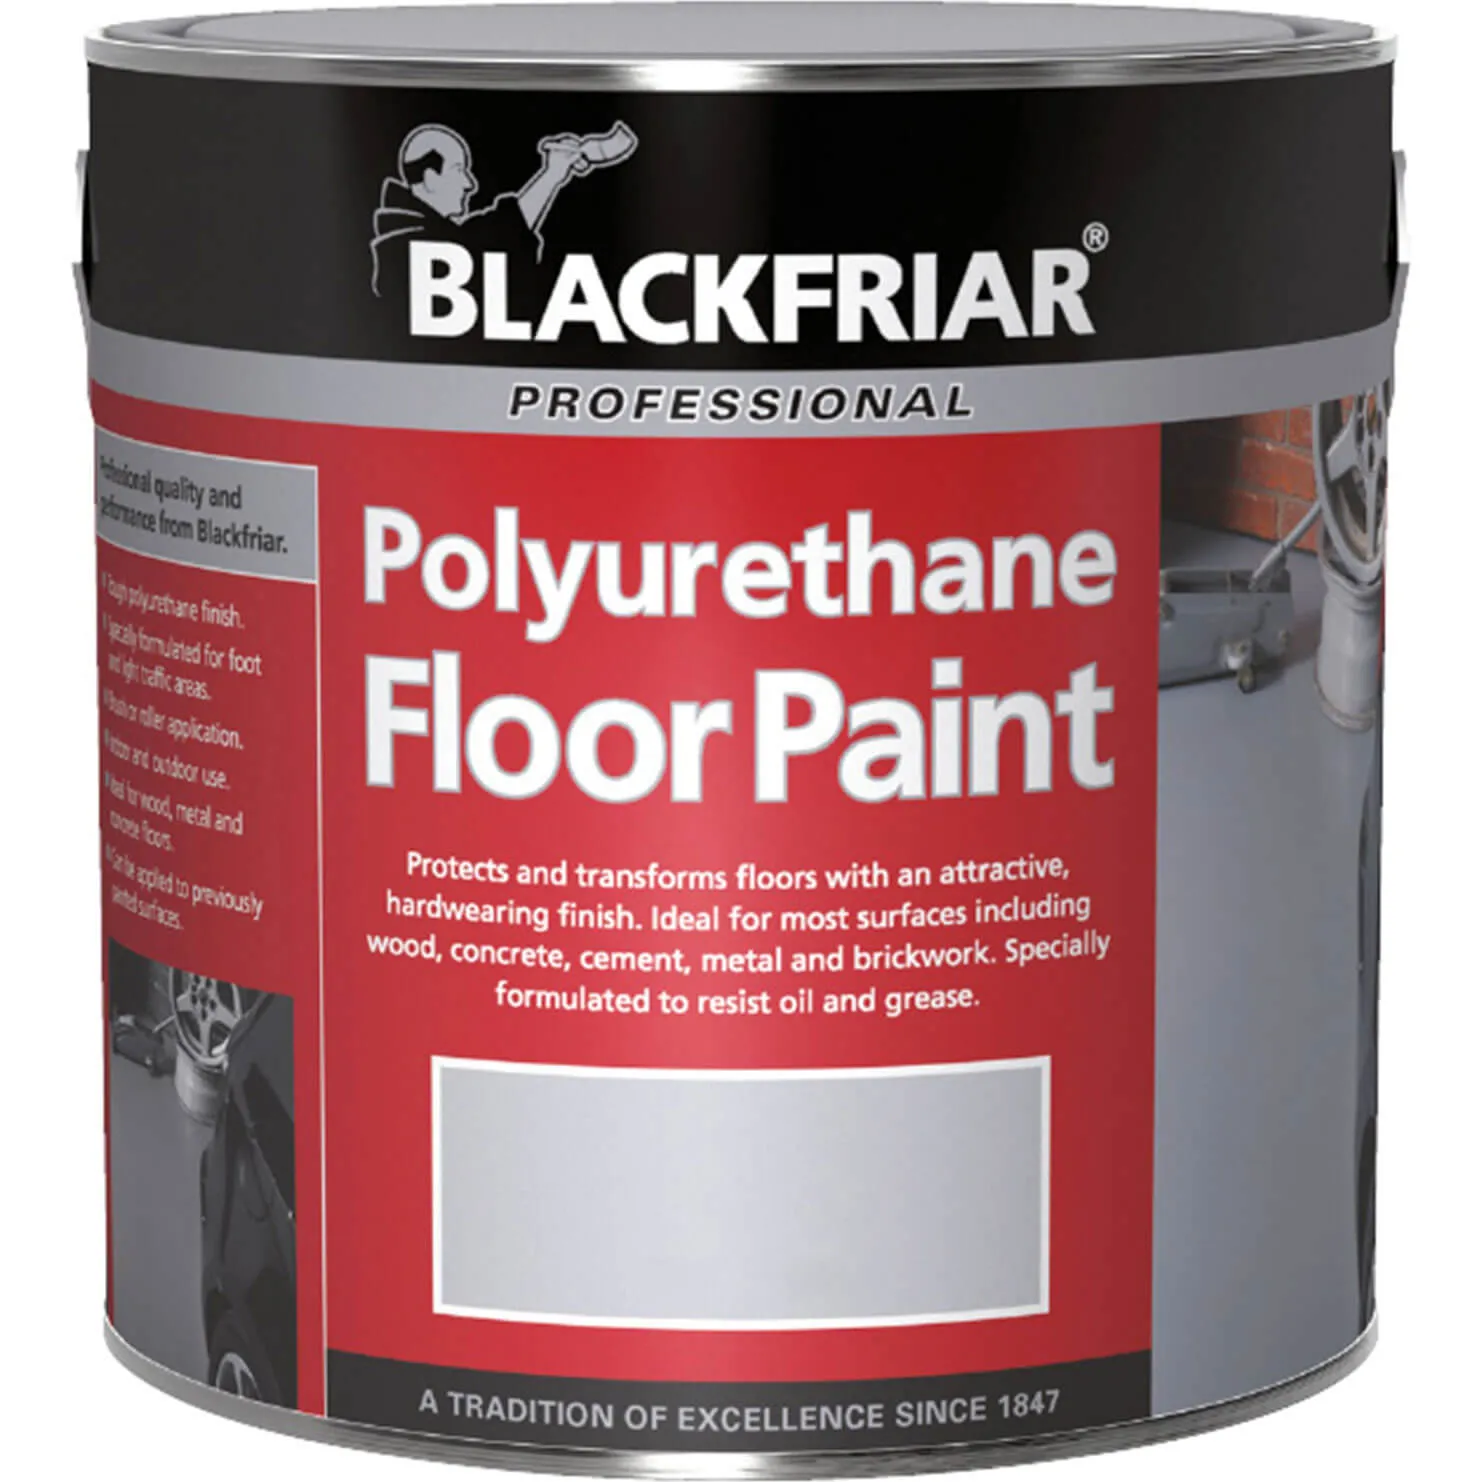 Blackfriar Professional Polyurethane Floor Paint - Tile Red, 500ml